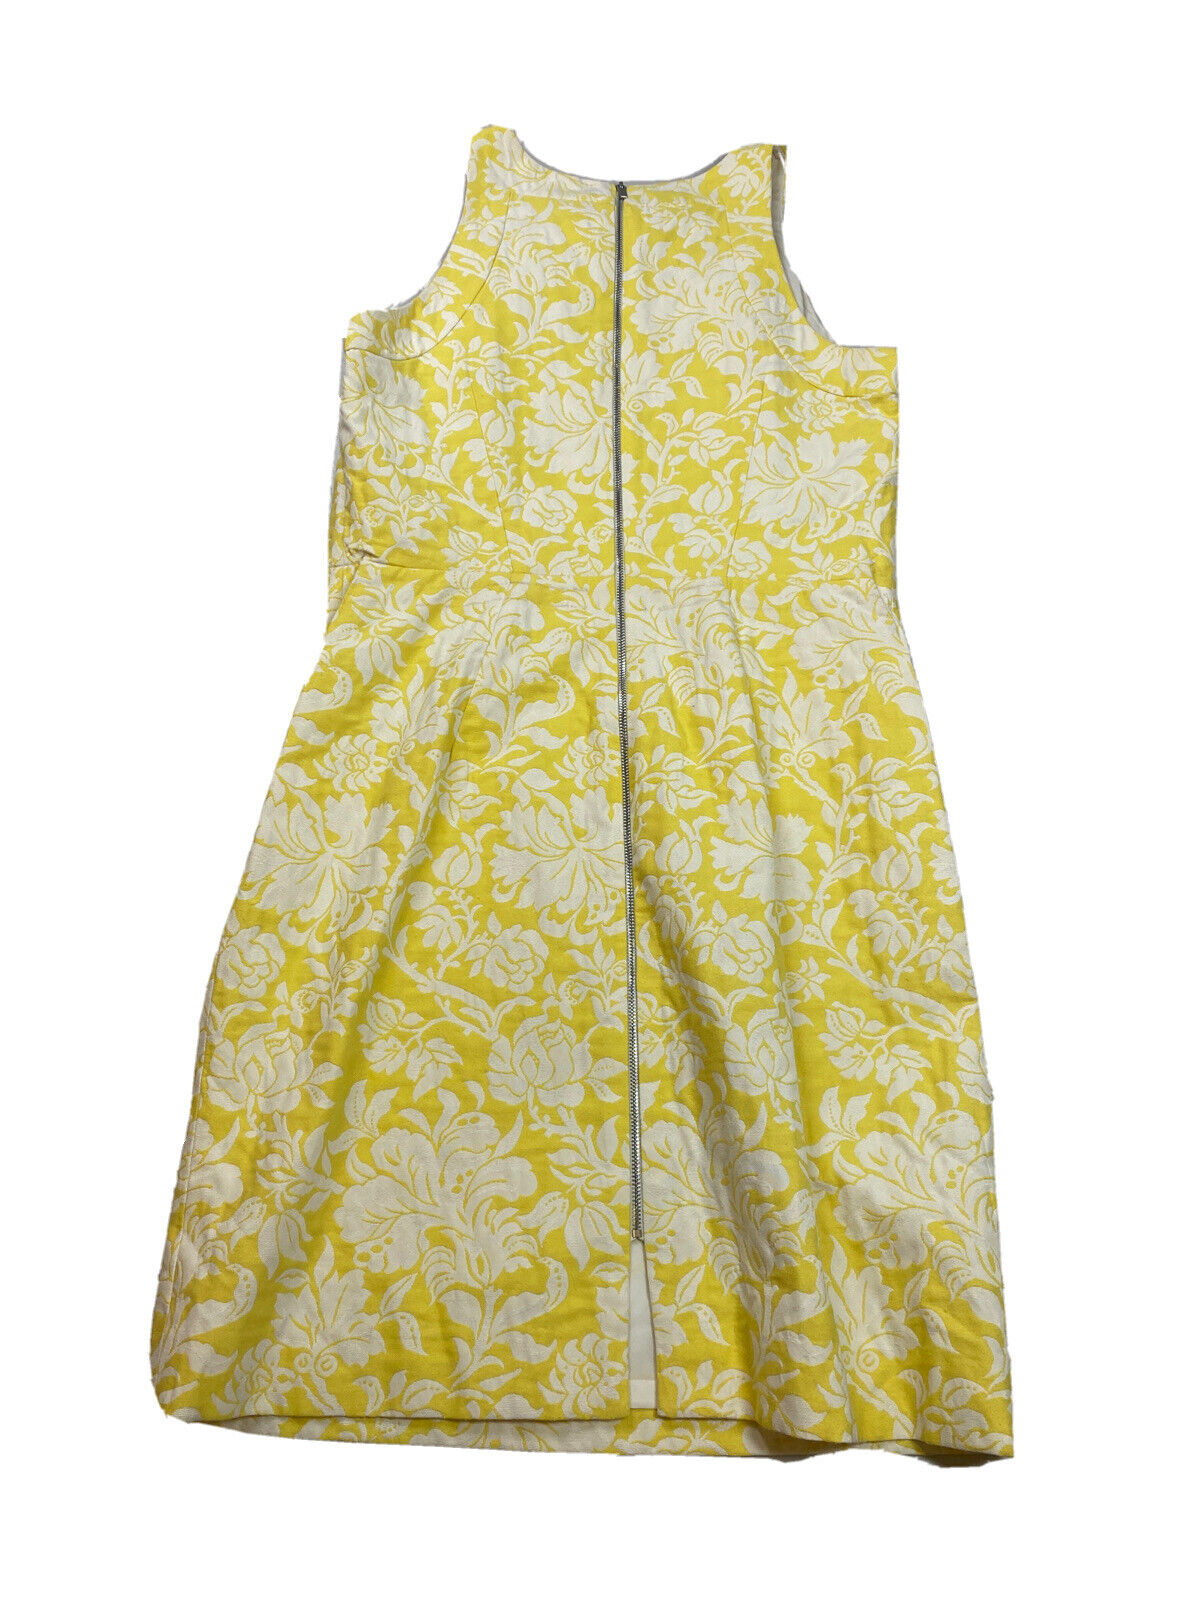 Ann Taylor Women's Yellow Sleeveless Floral Shift Dress - Petite 8P